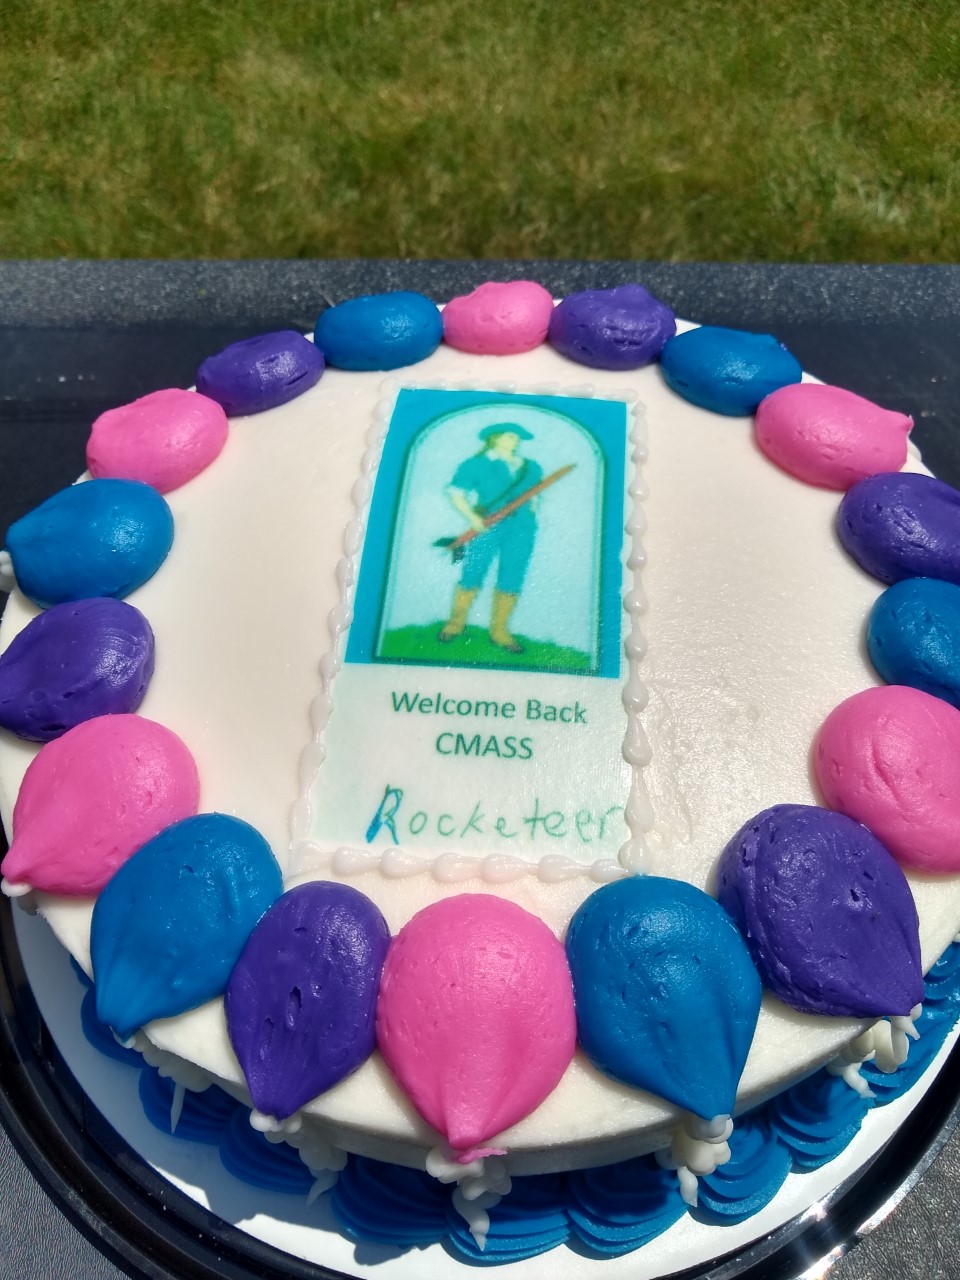 cmass cake 20210620 1709869979